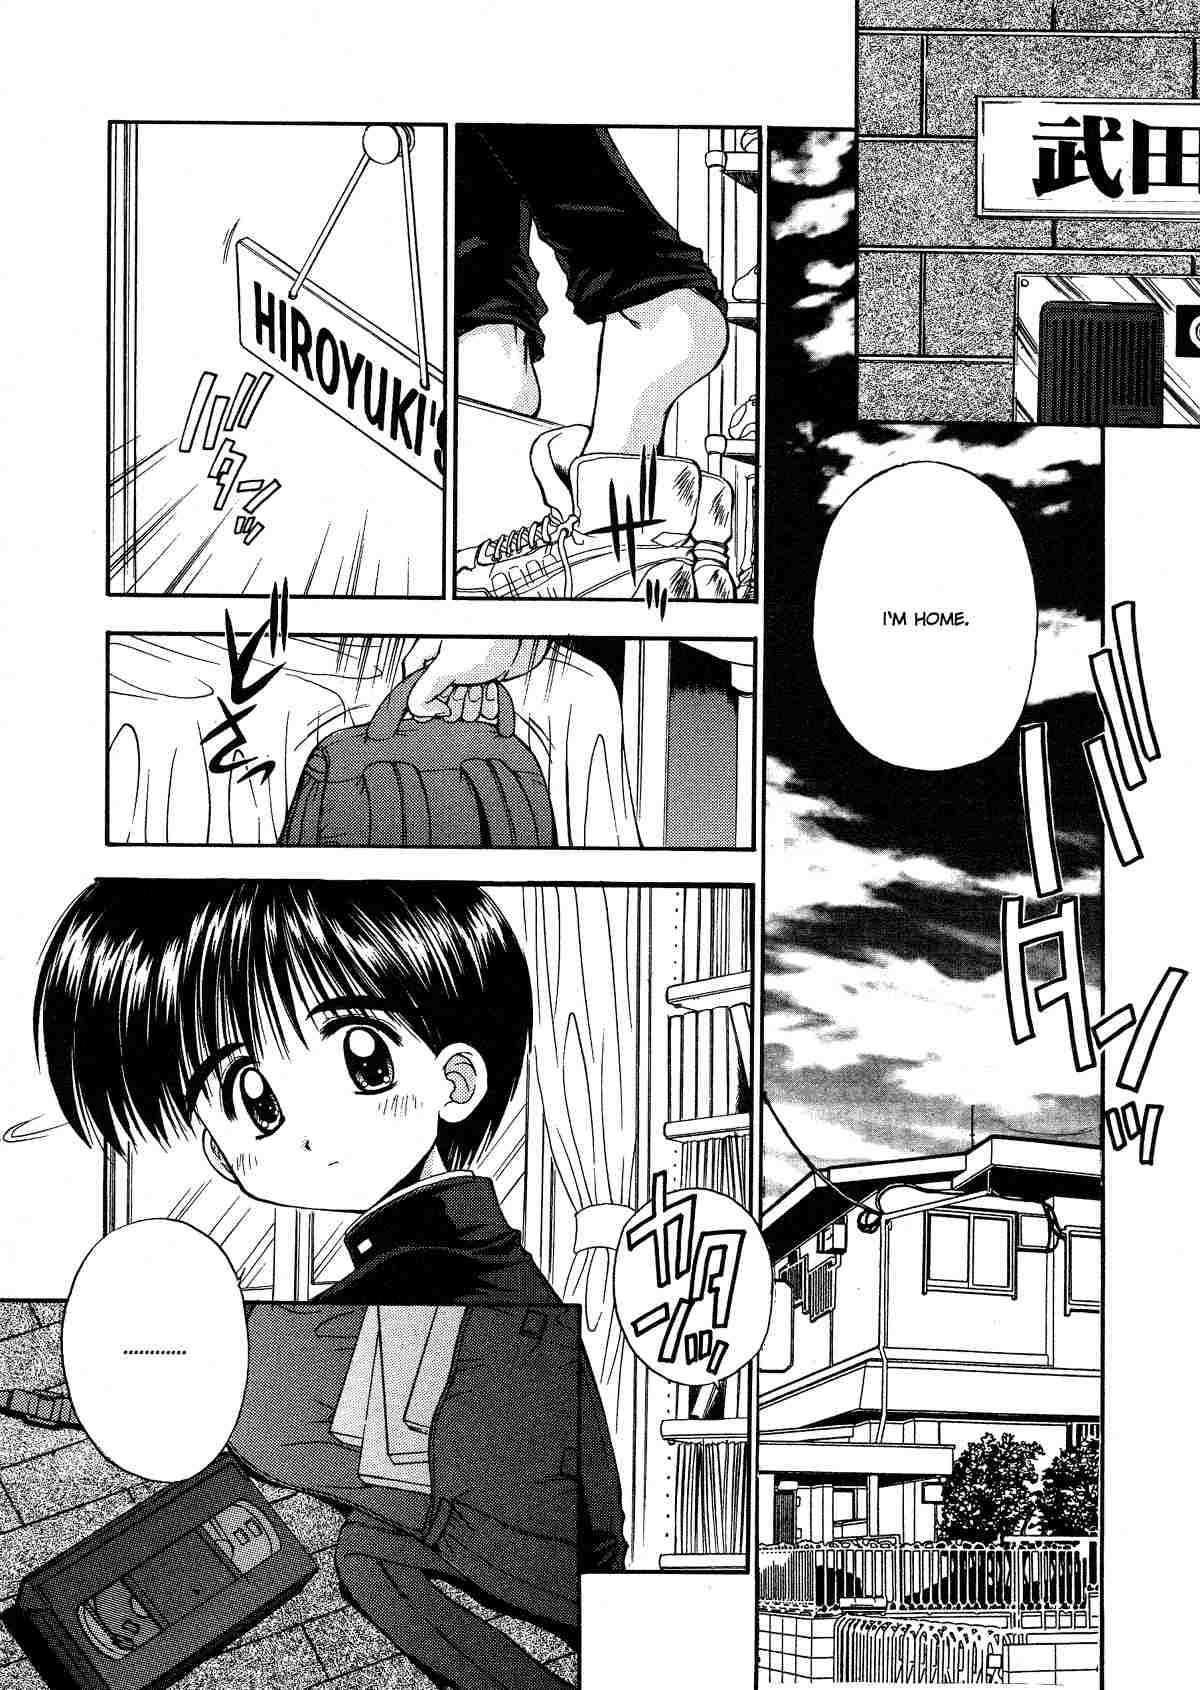 Innocence 23 hentai manga